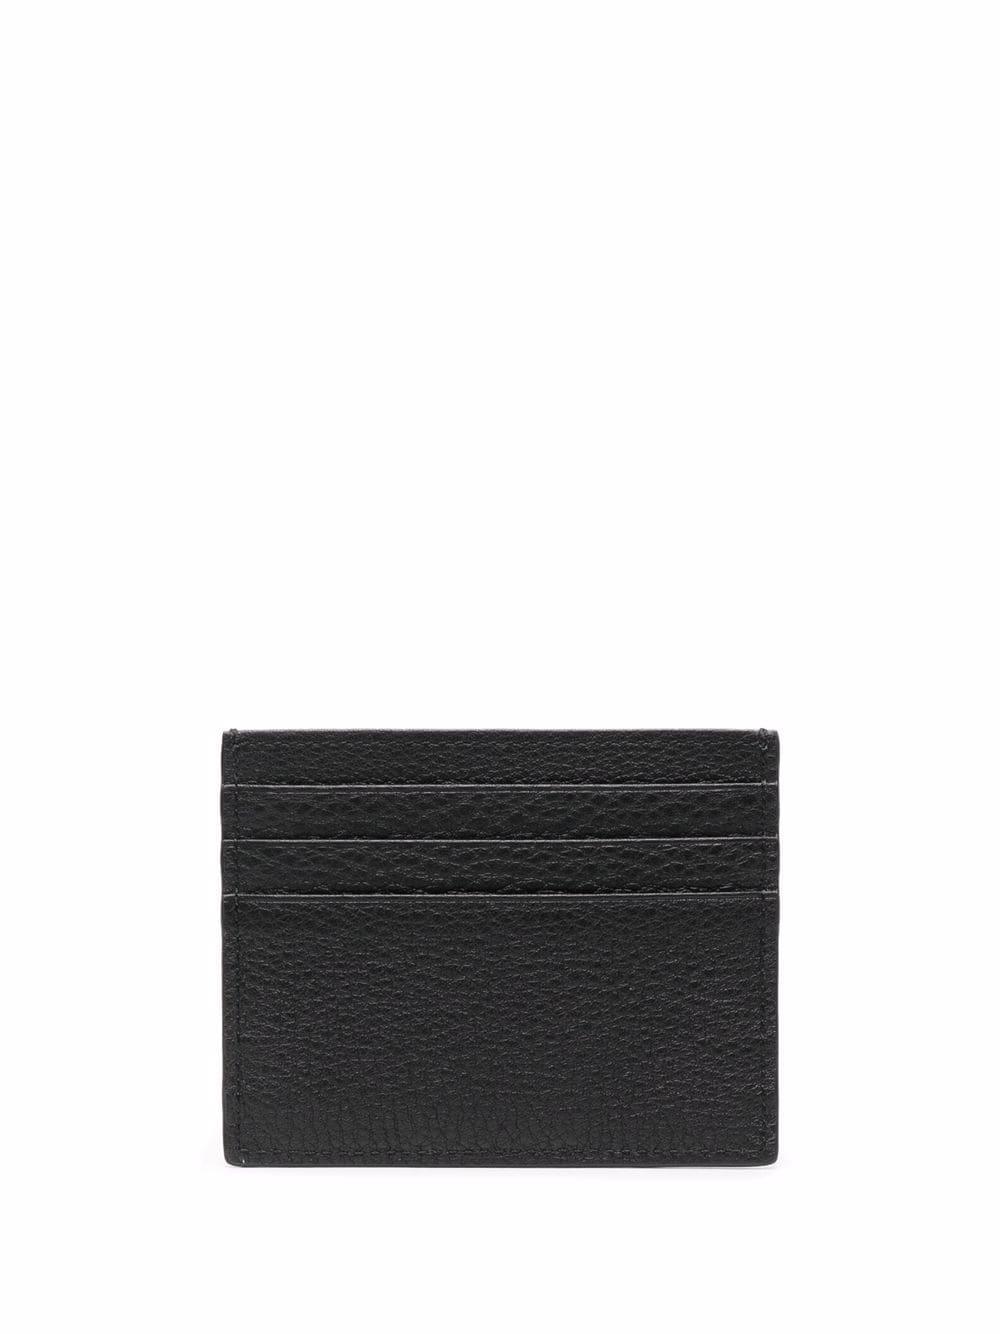 FENDI FF textured-leather cardholder - Black